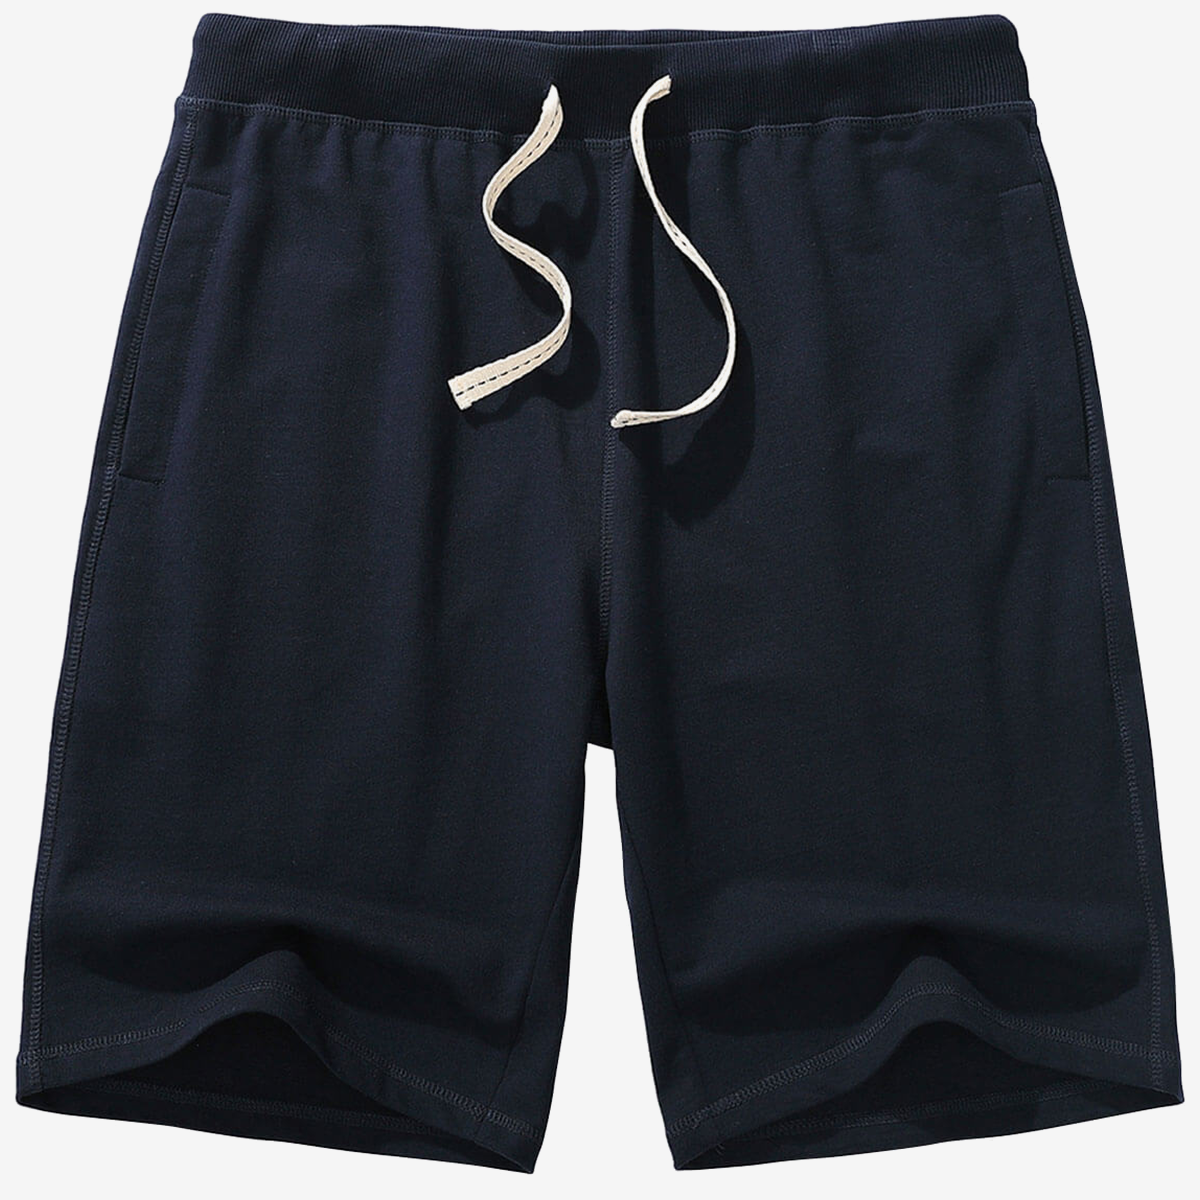 Men's Sweatpant Cotton Casual Summer Solid Color Breathable Sport Short